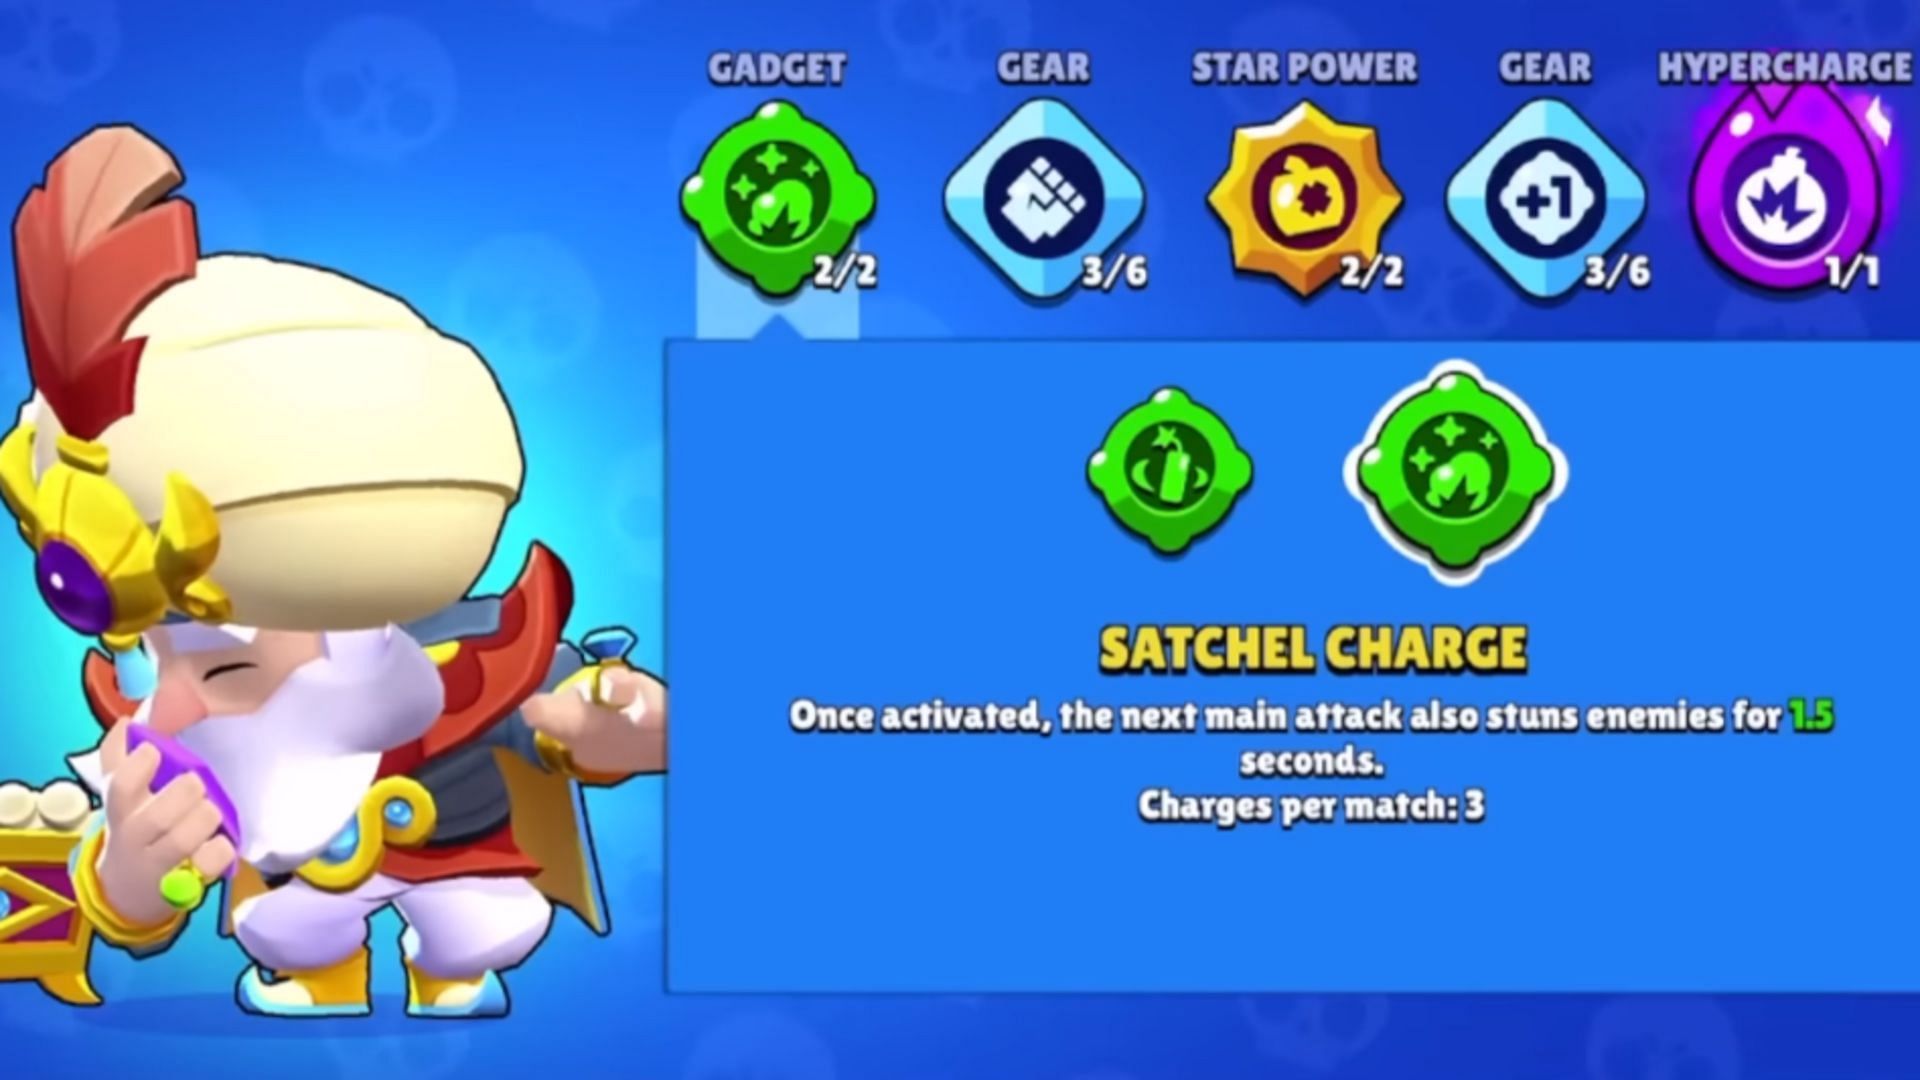 Satchel Charge Gadget (Image via Supercell)